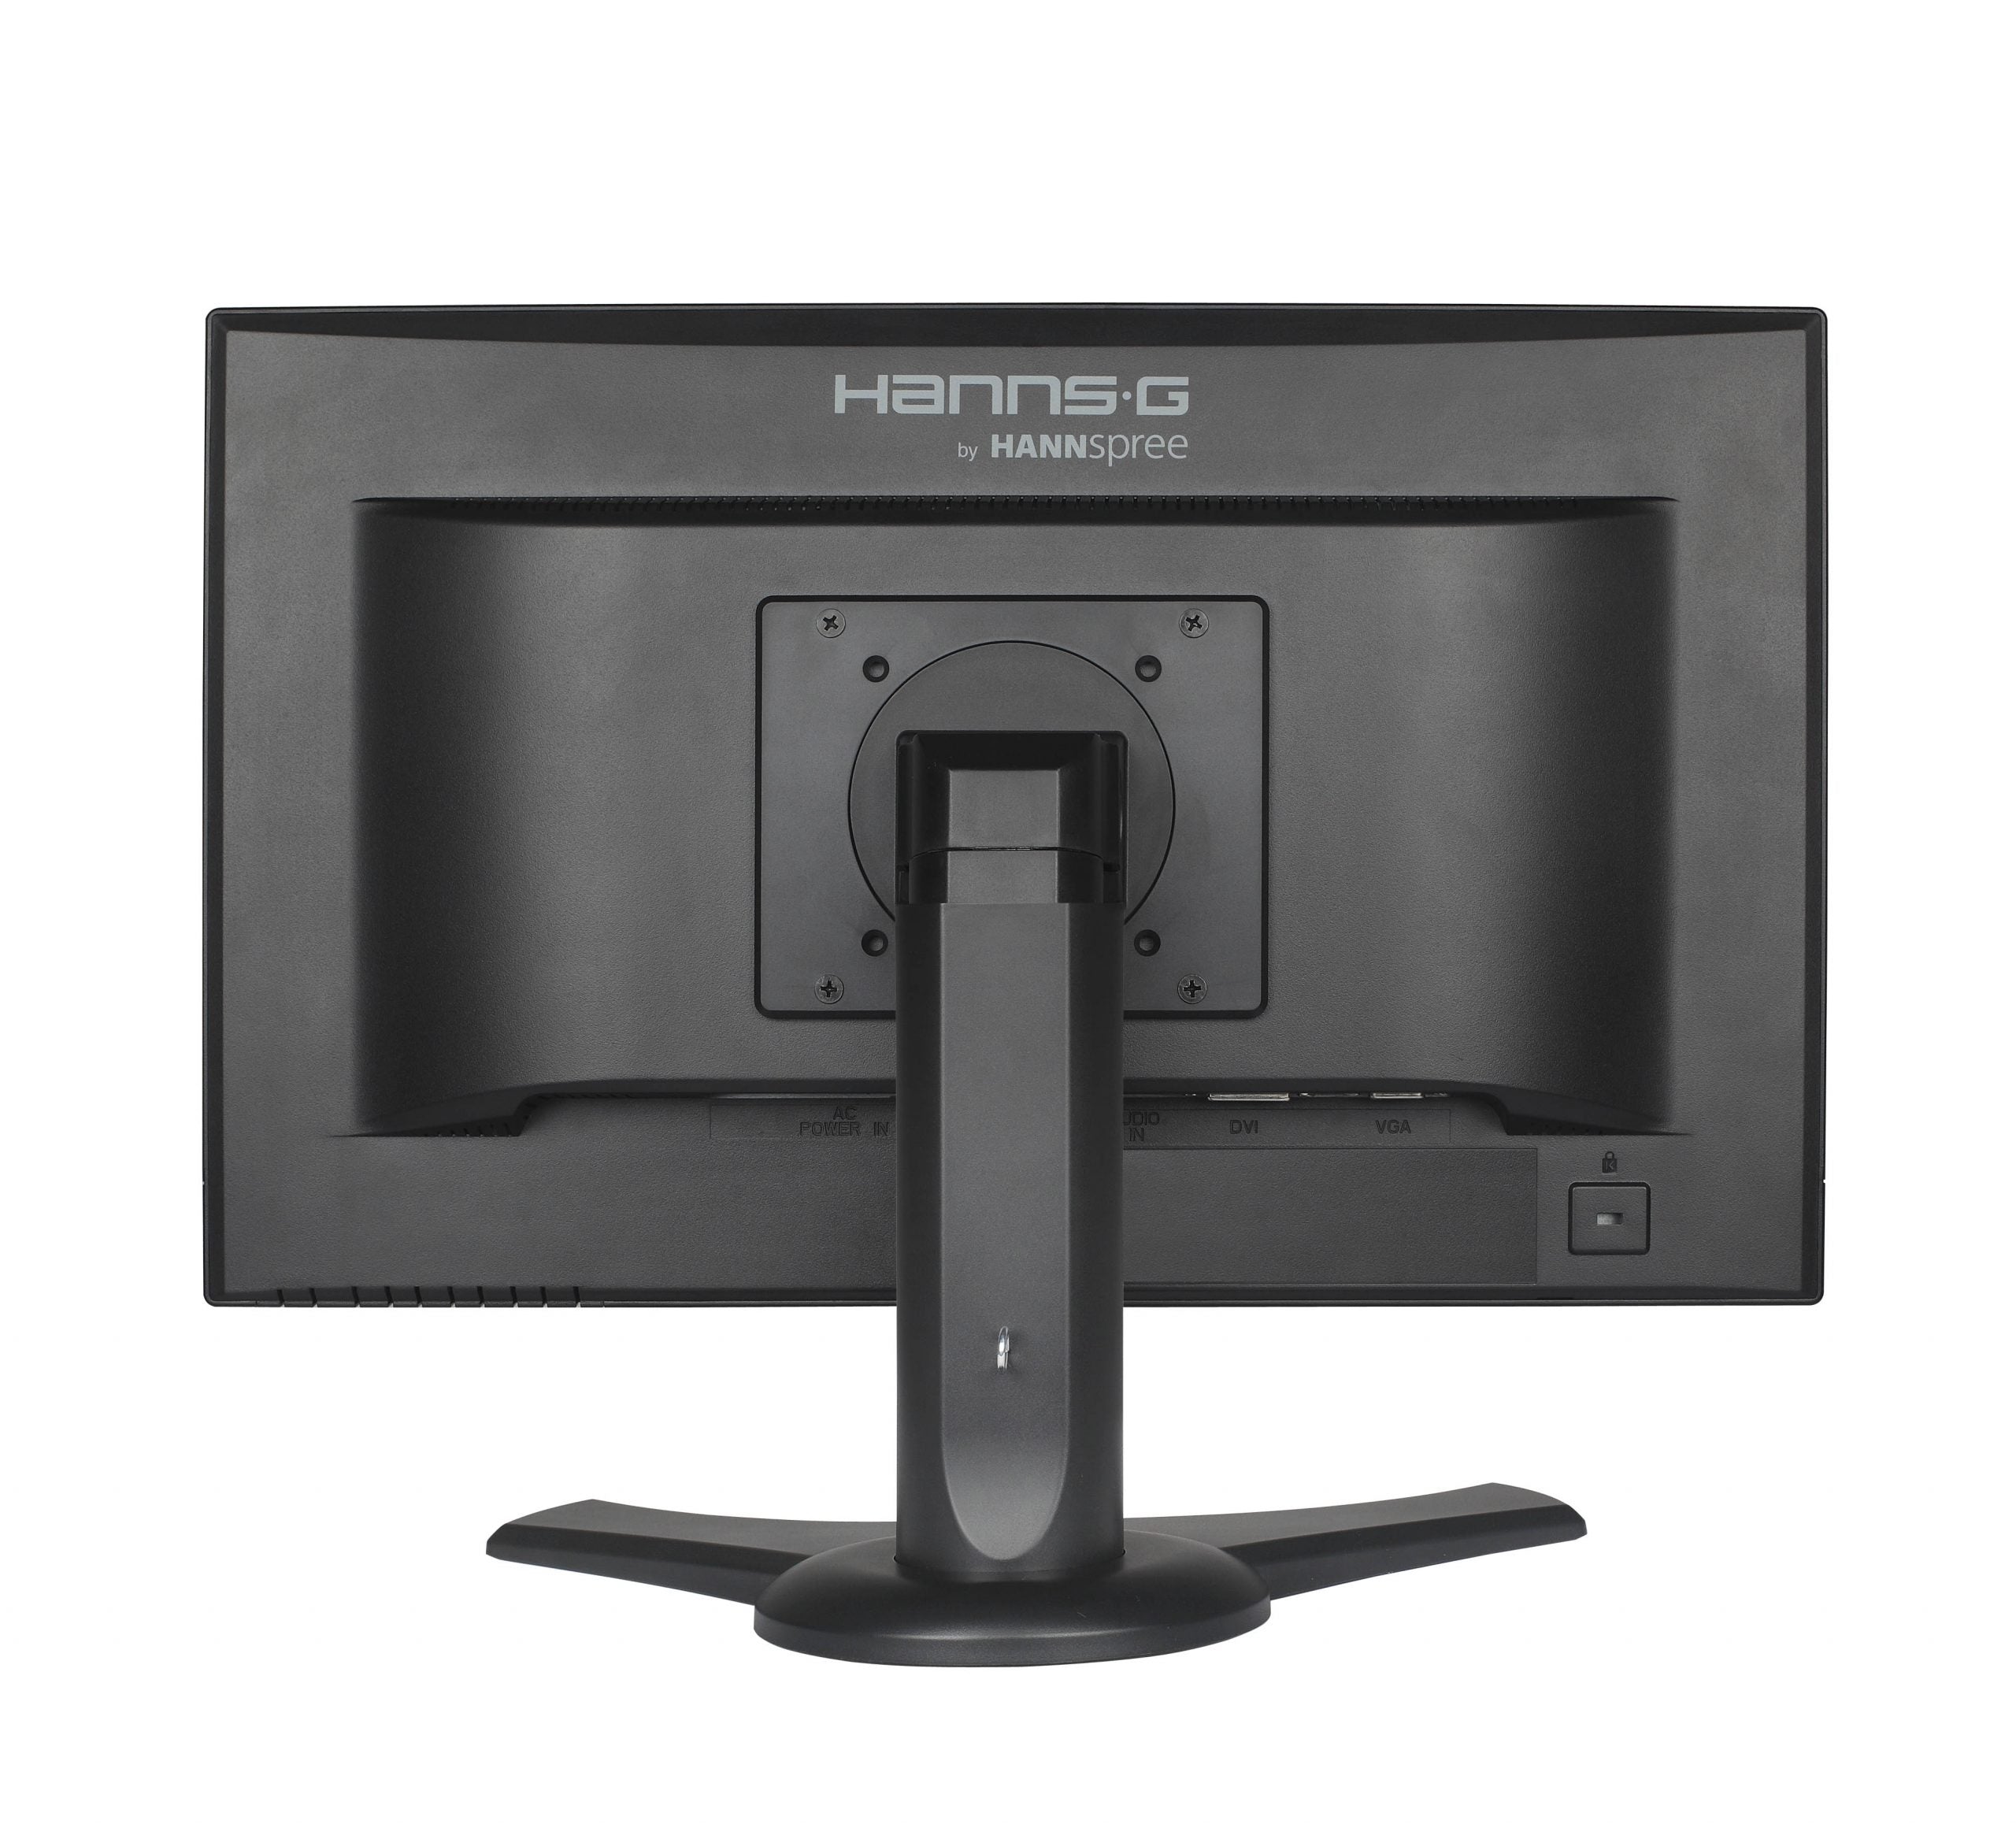 Hannspree Hanns.G HP 205 TFT-LED-LCD-Monitor, 20 Zoll, 1600 x 900 Pixel, Kontrast 1000:1, Helligkeit 250 cd/m², Reaktionszeit 5 ms, VGA DVI